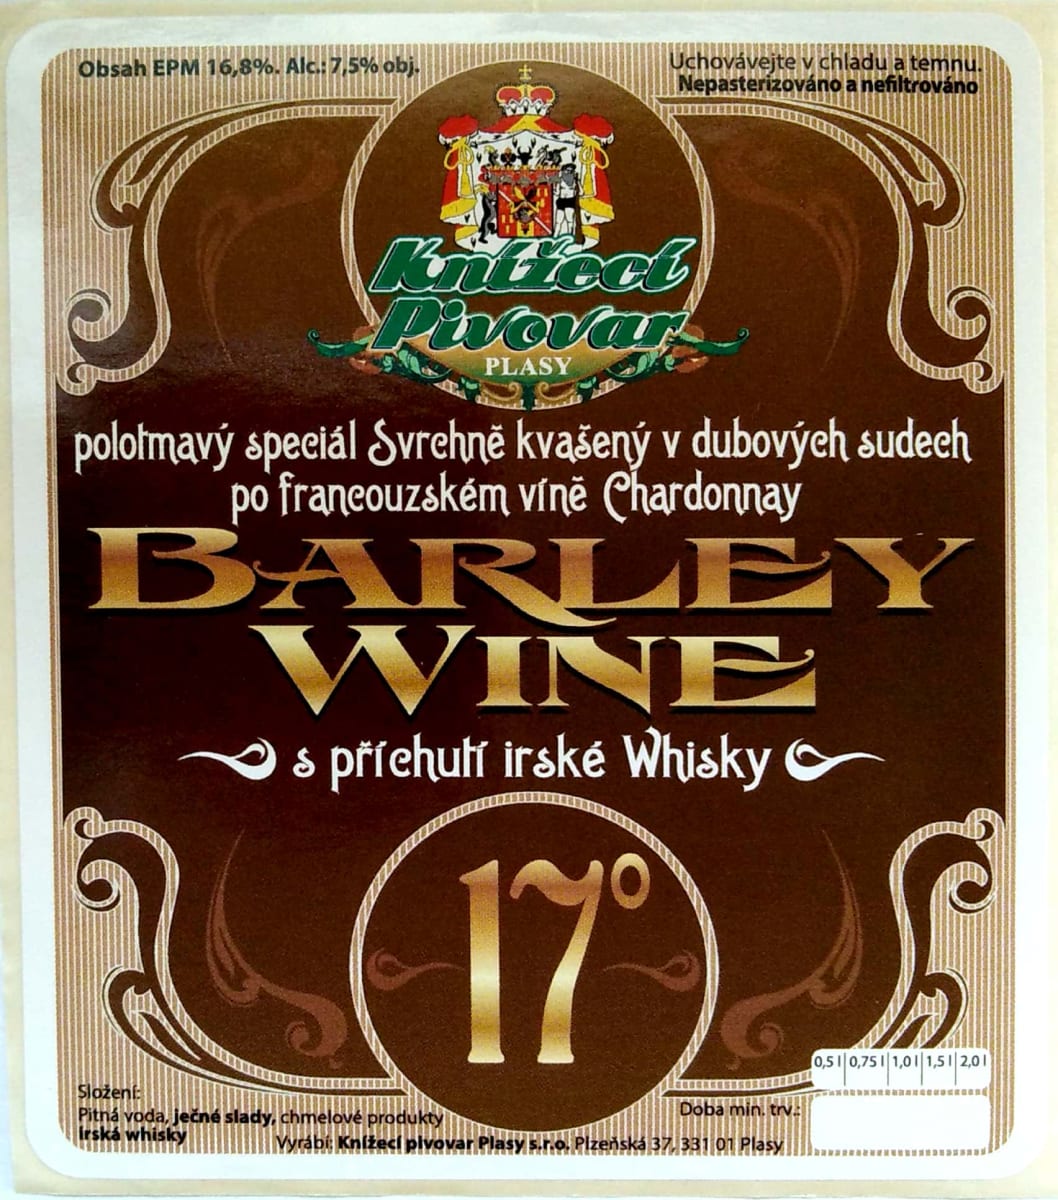 Plasy Barley Wine Etk. A